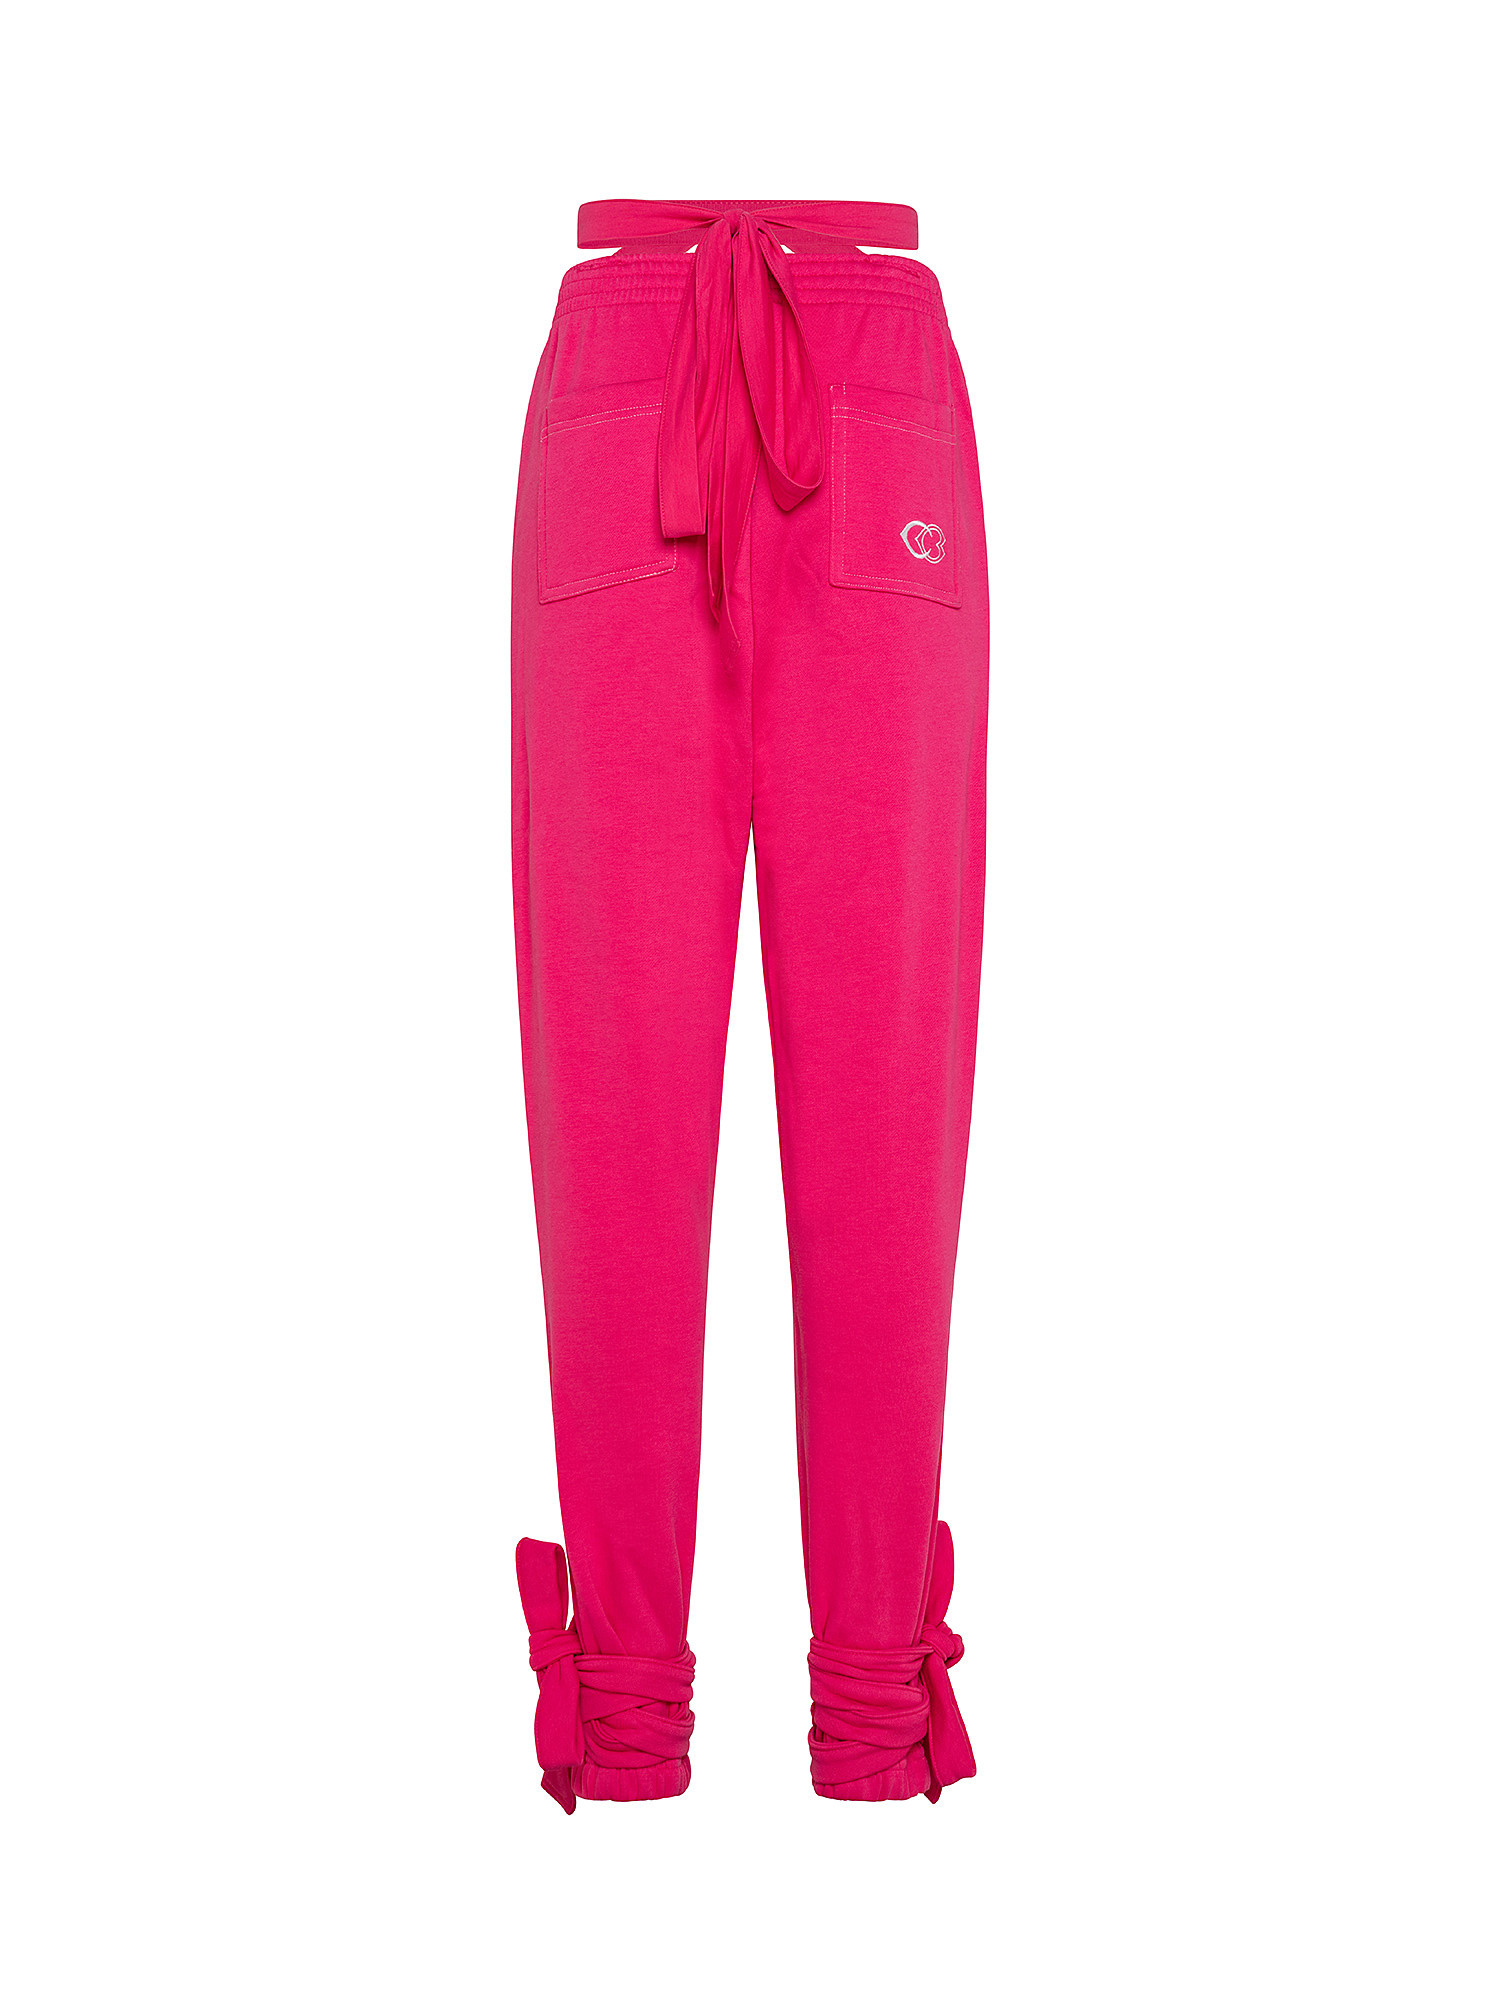 Cardi B Knit Pants, Pink Fuchsia, large image number 1